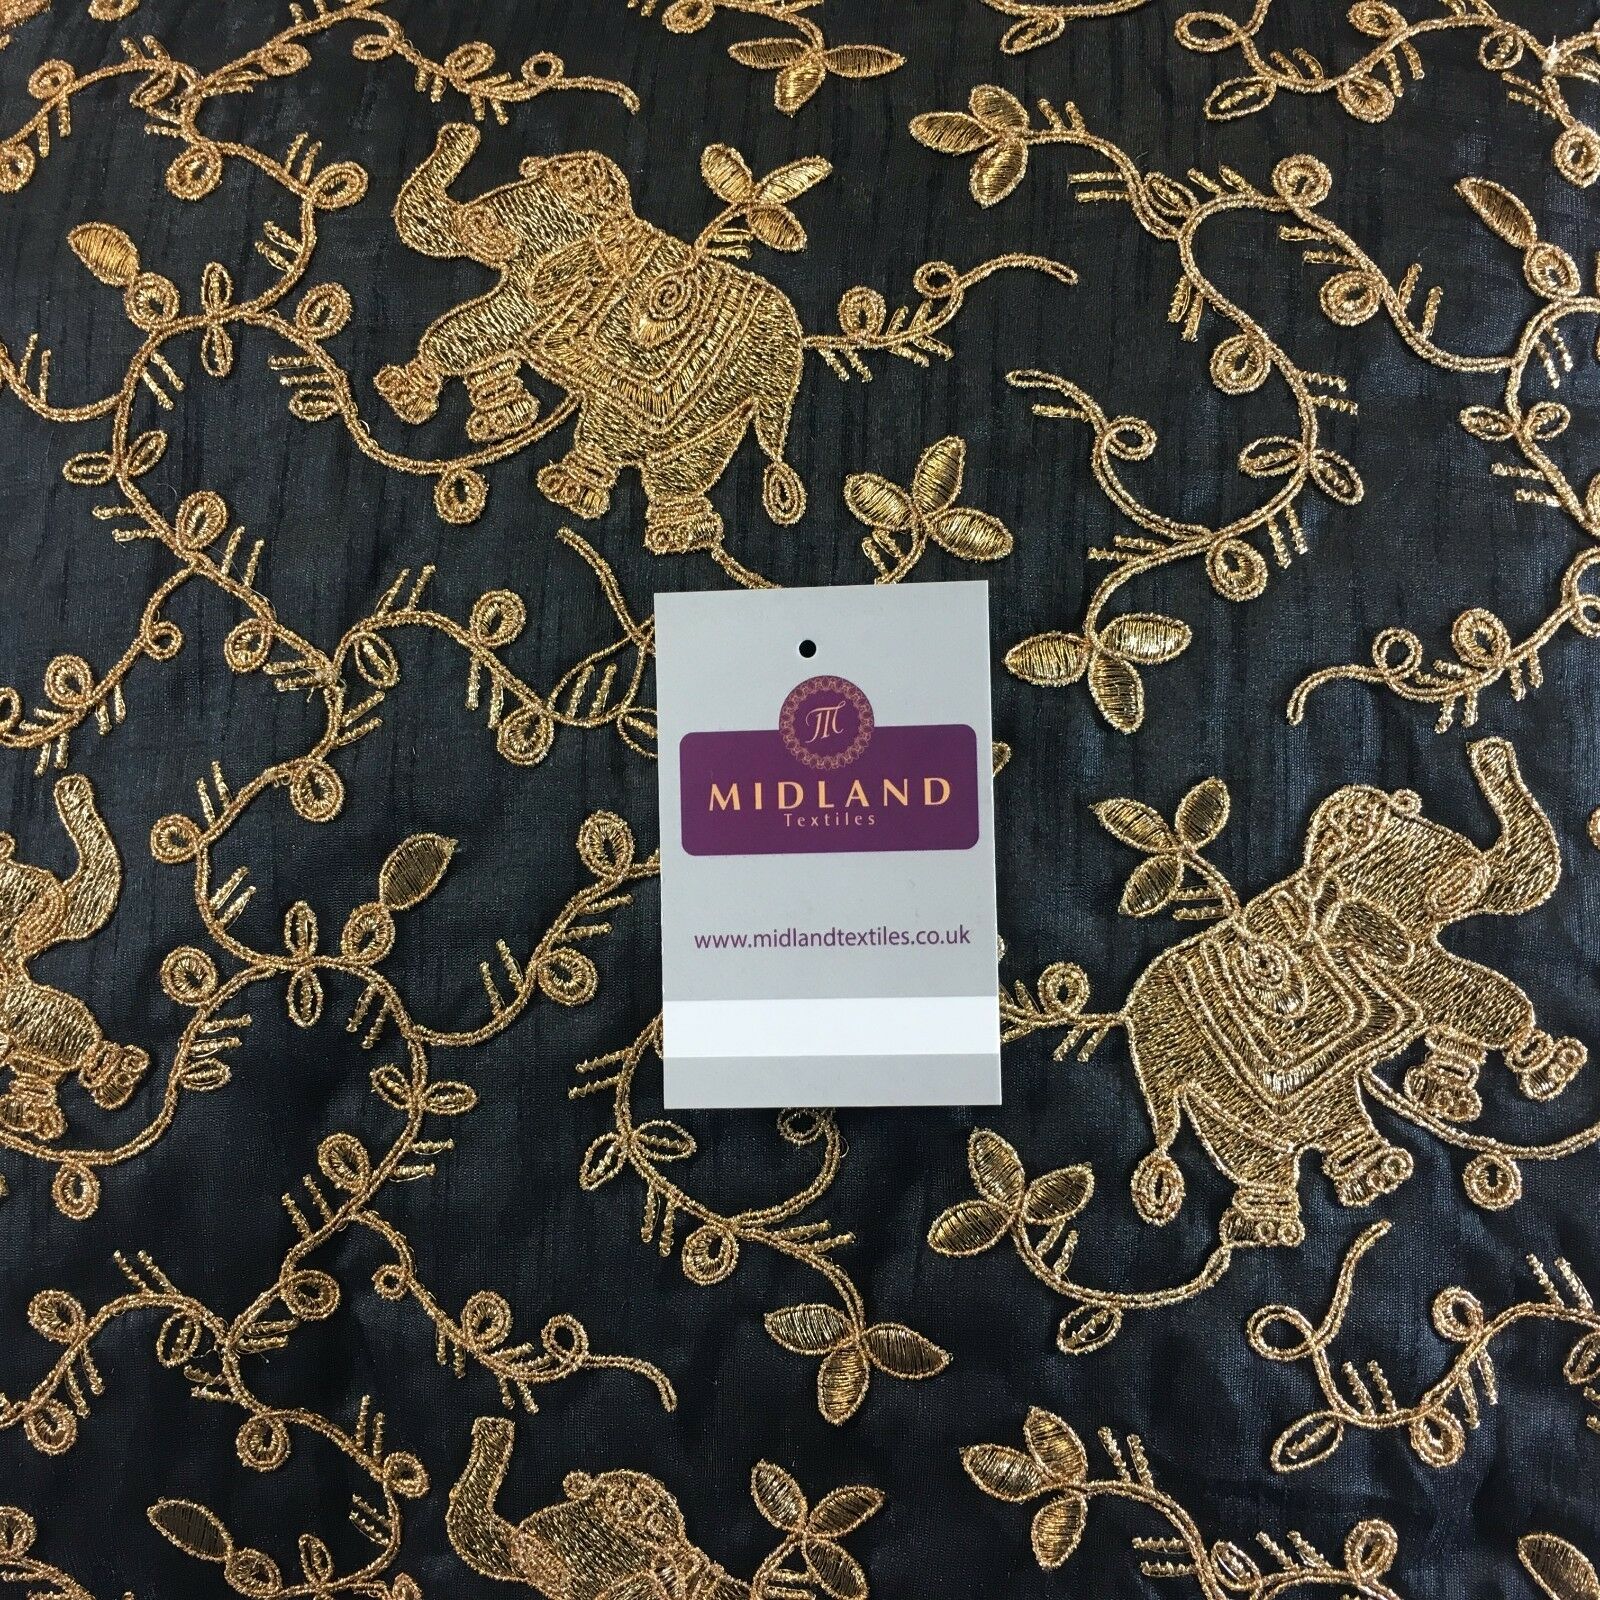 Light Gold Silk Taffeta Fabric 100% Pure Silk 54 Wide Sold by the Yard -   Denmark